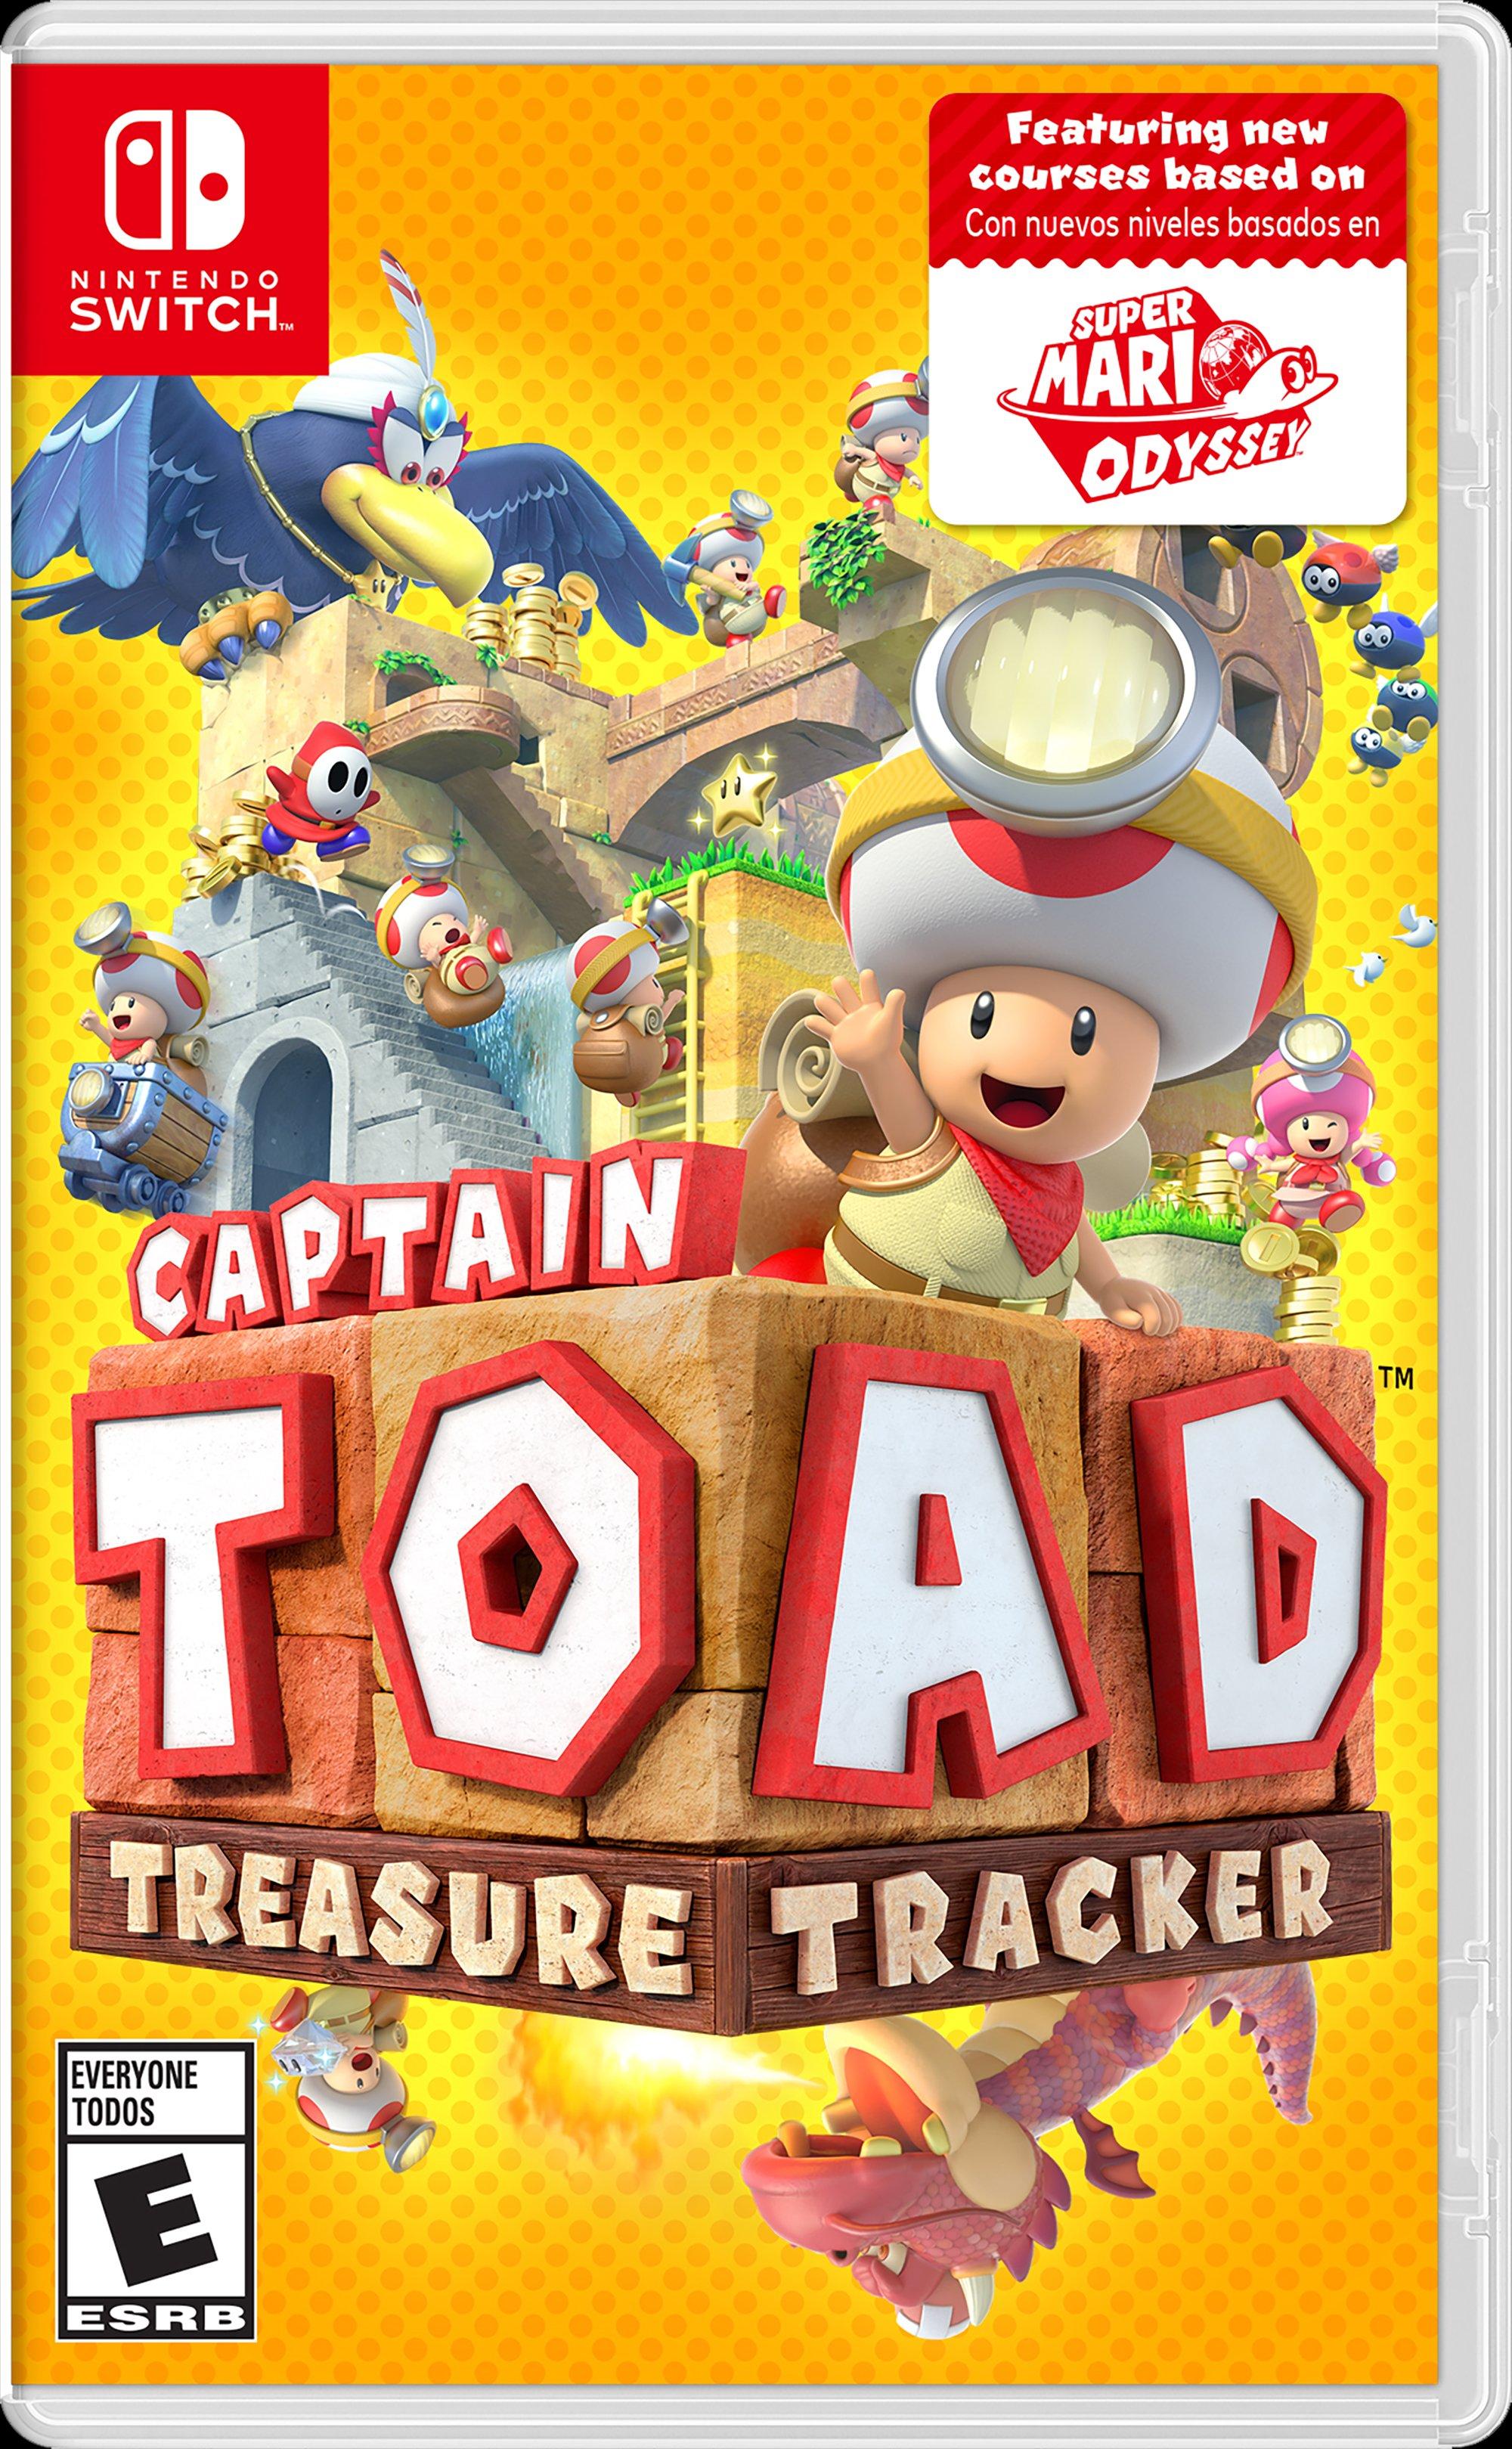 captain toad treasure tracker free download